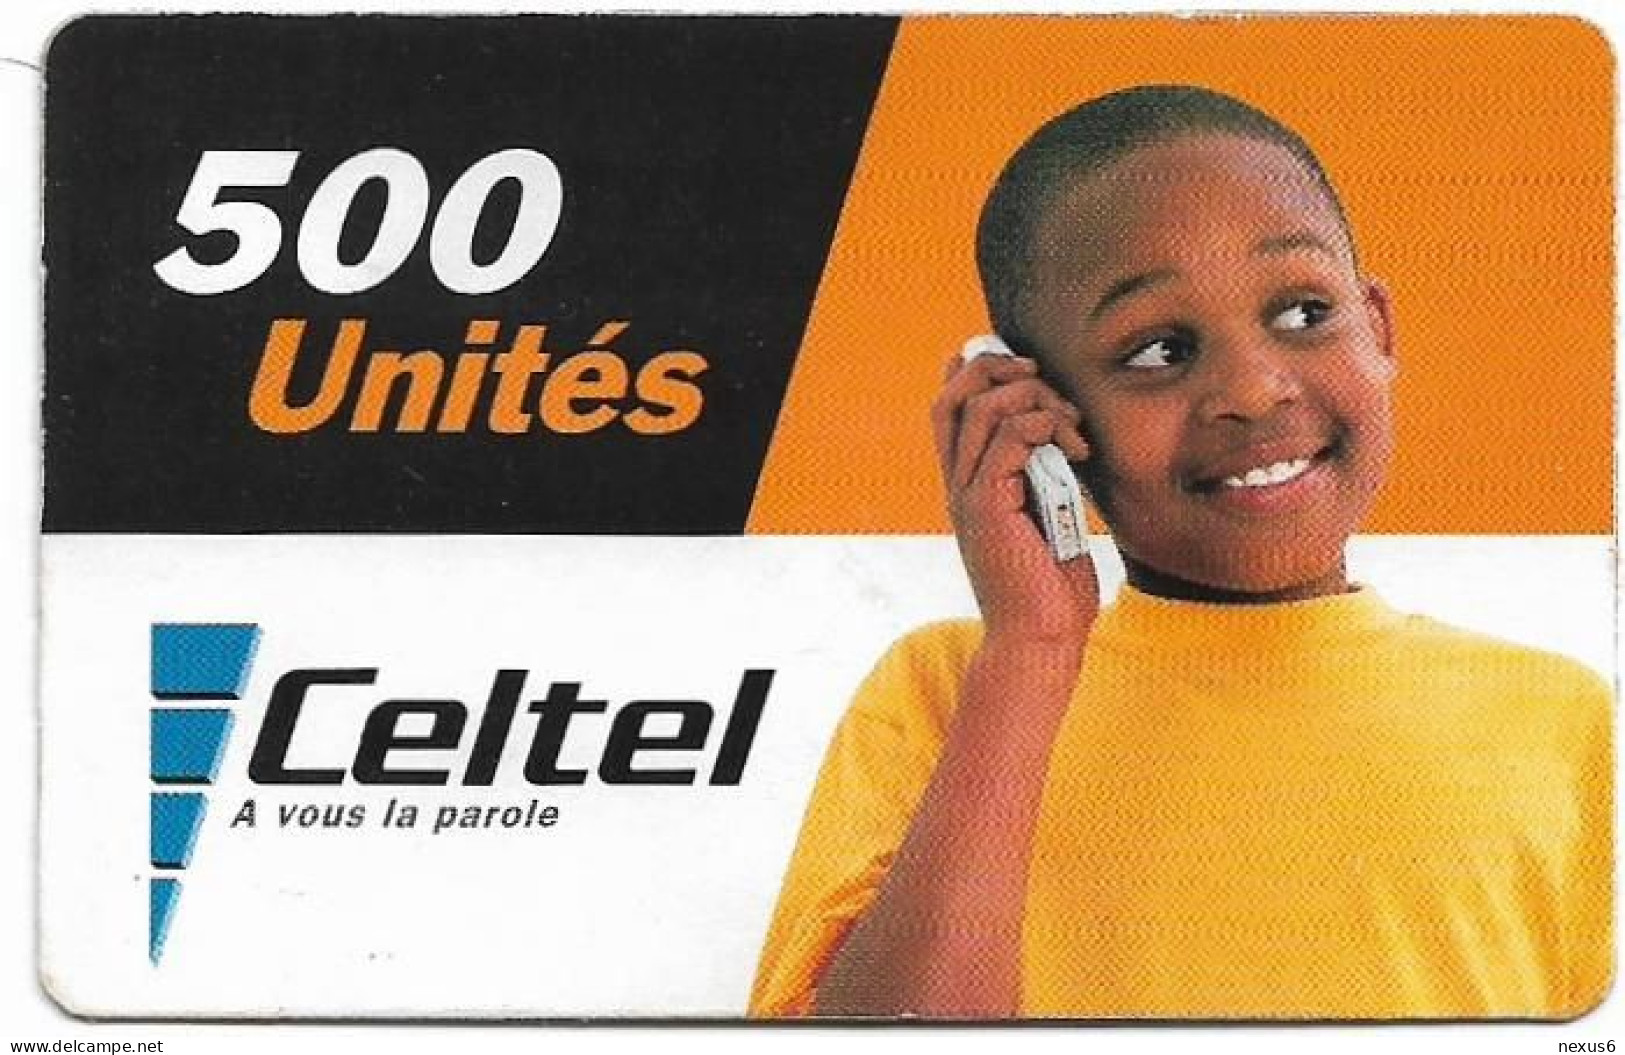 Congo Republic (Kinshasa) - Celtel - Young Boy At Phone (Reverse 1), Exp. 31.12.2004, GSM Refill 500Units, Used - Congo